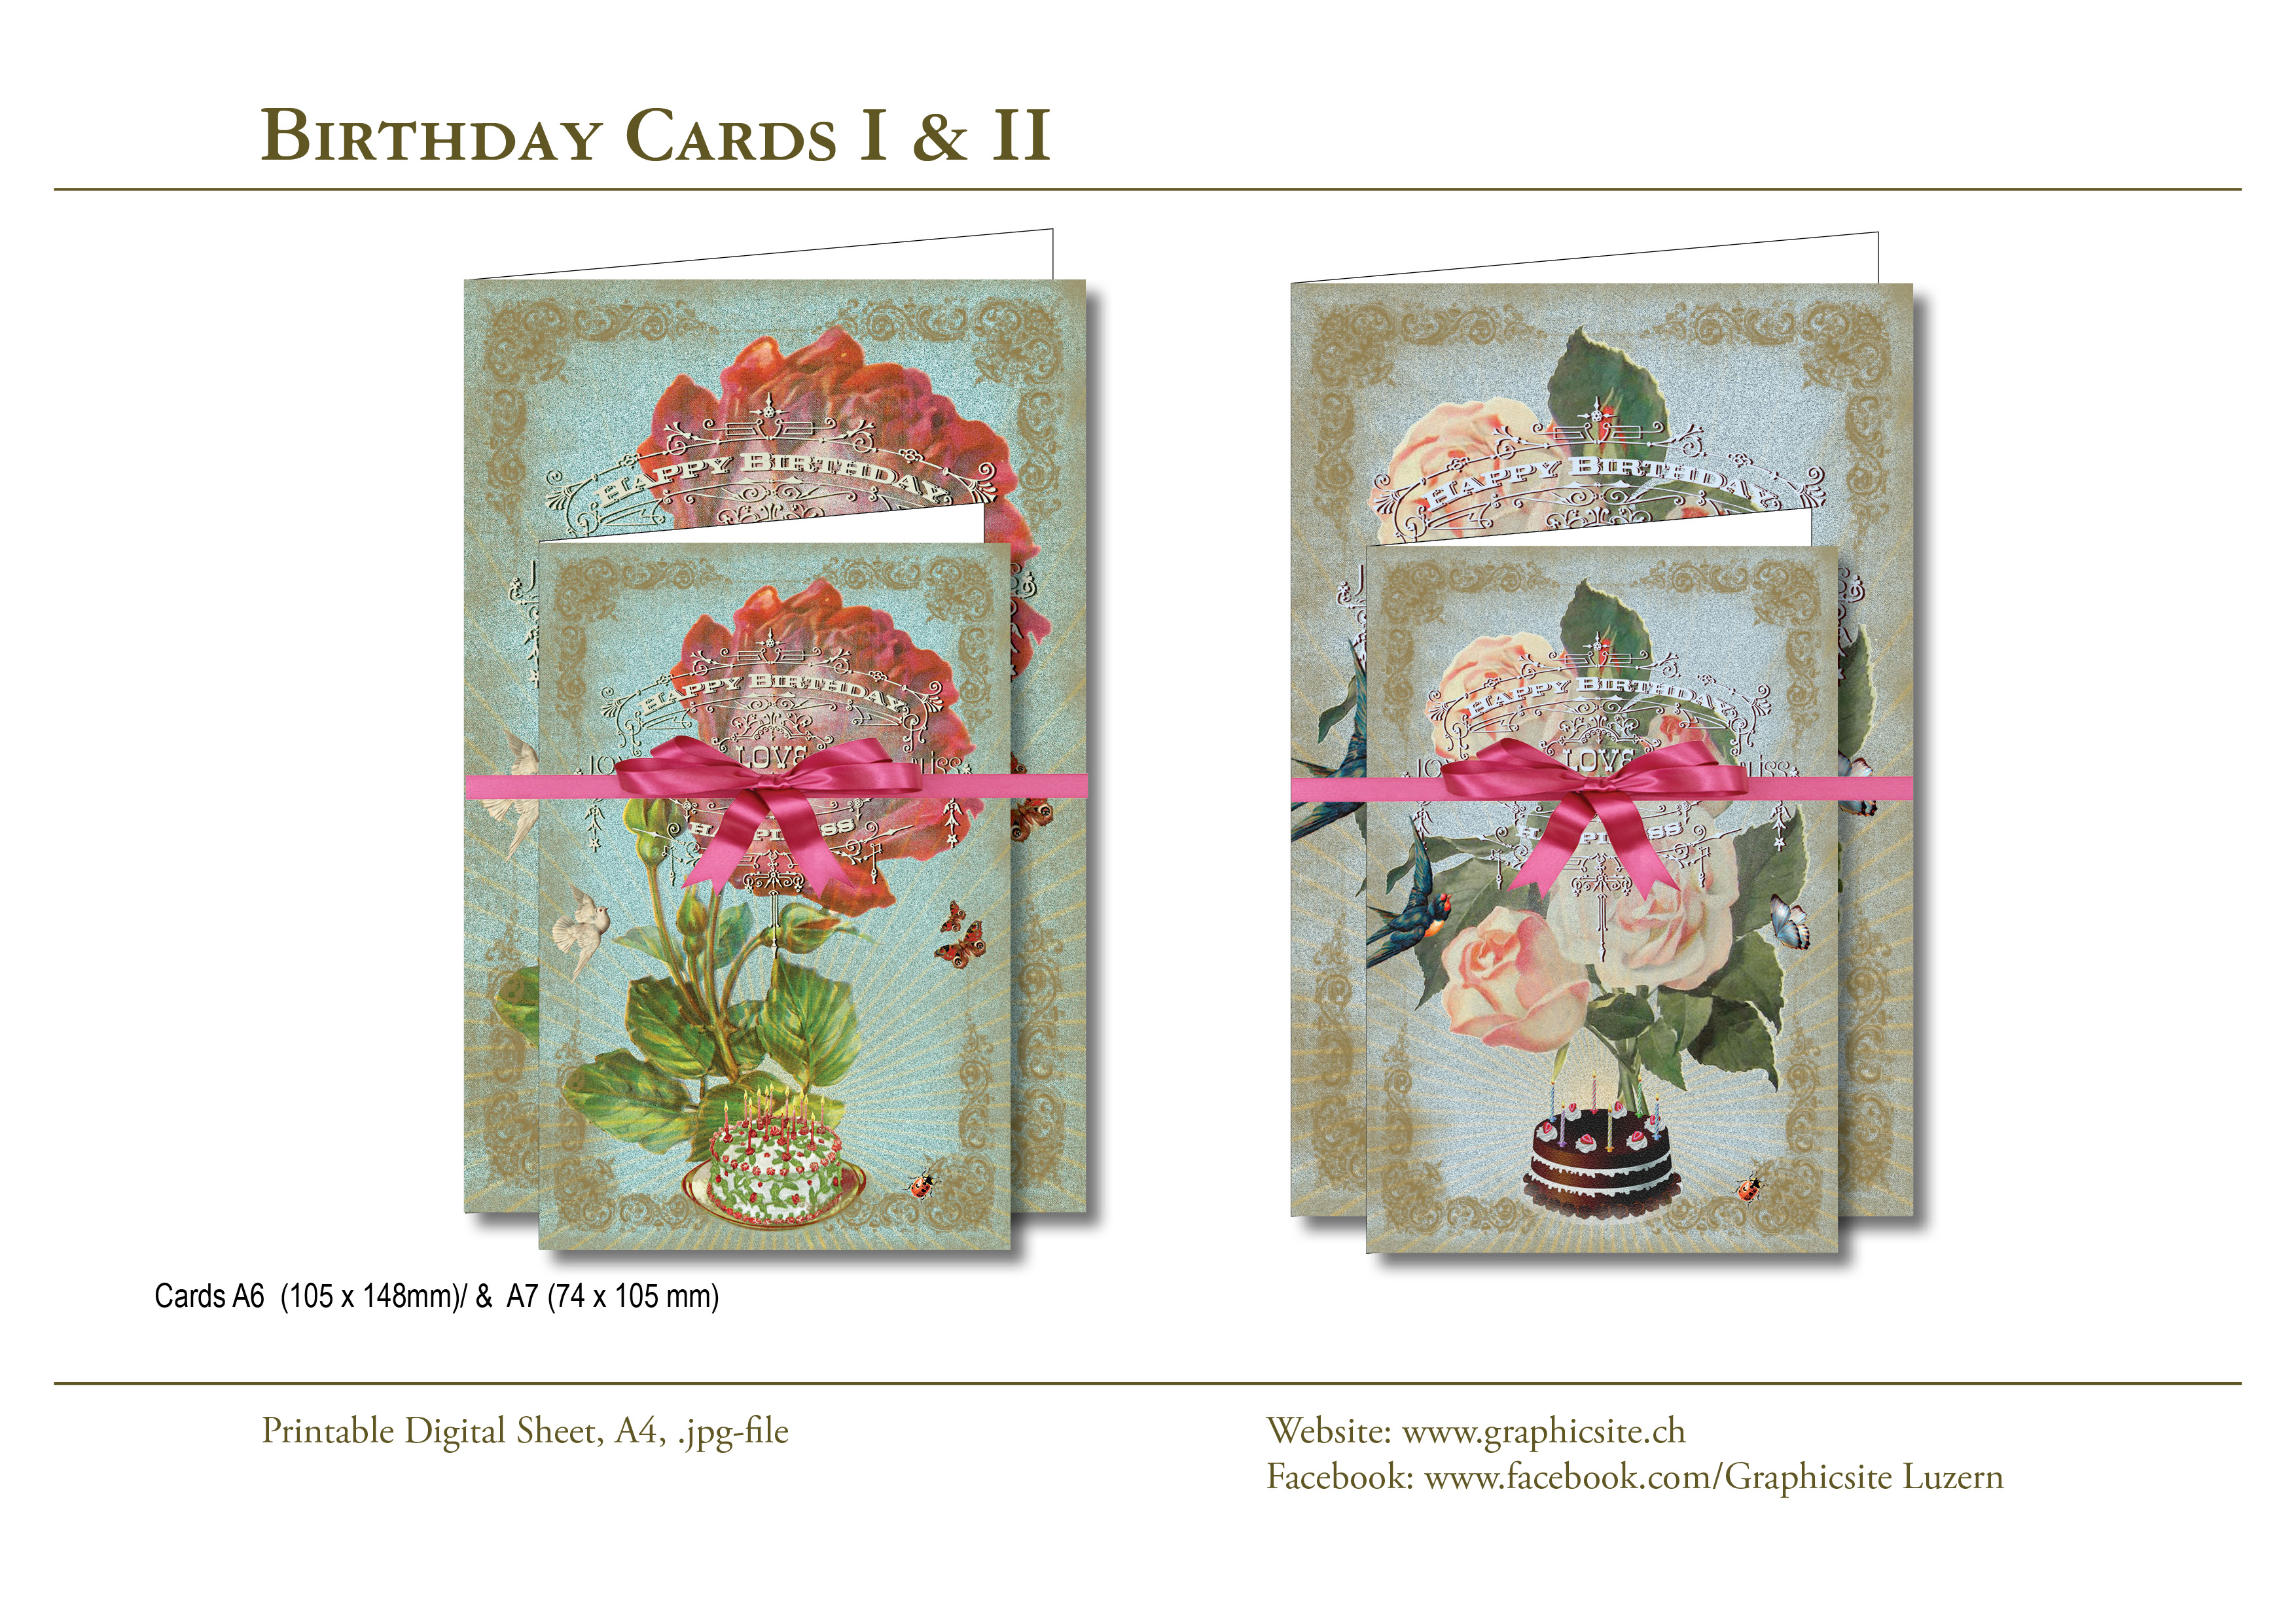 Printable Digital Sheets - Cards A6 / A7 - Birthday 1 & 2